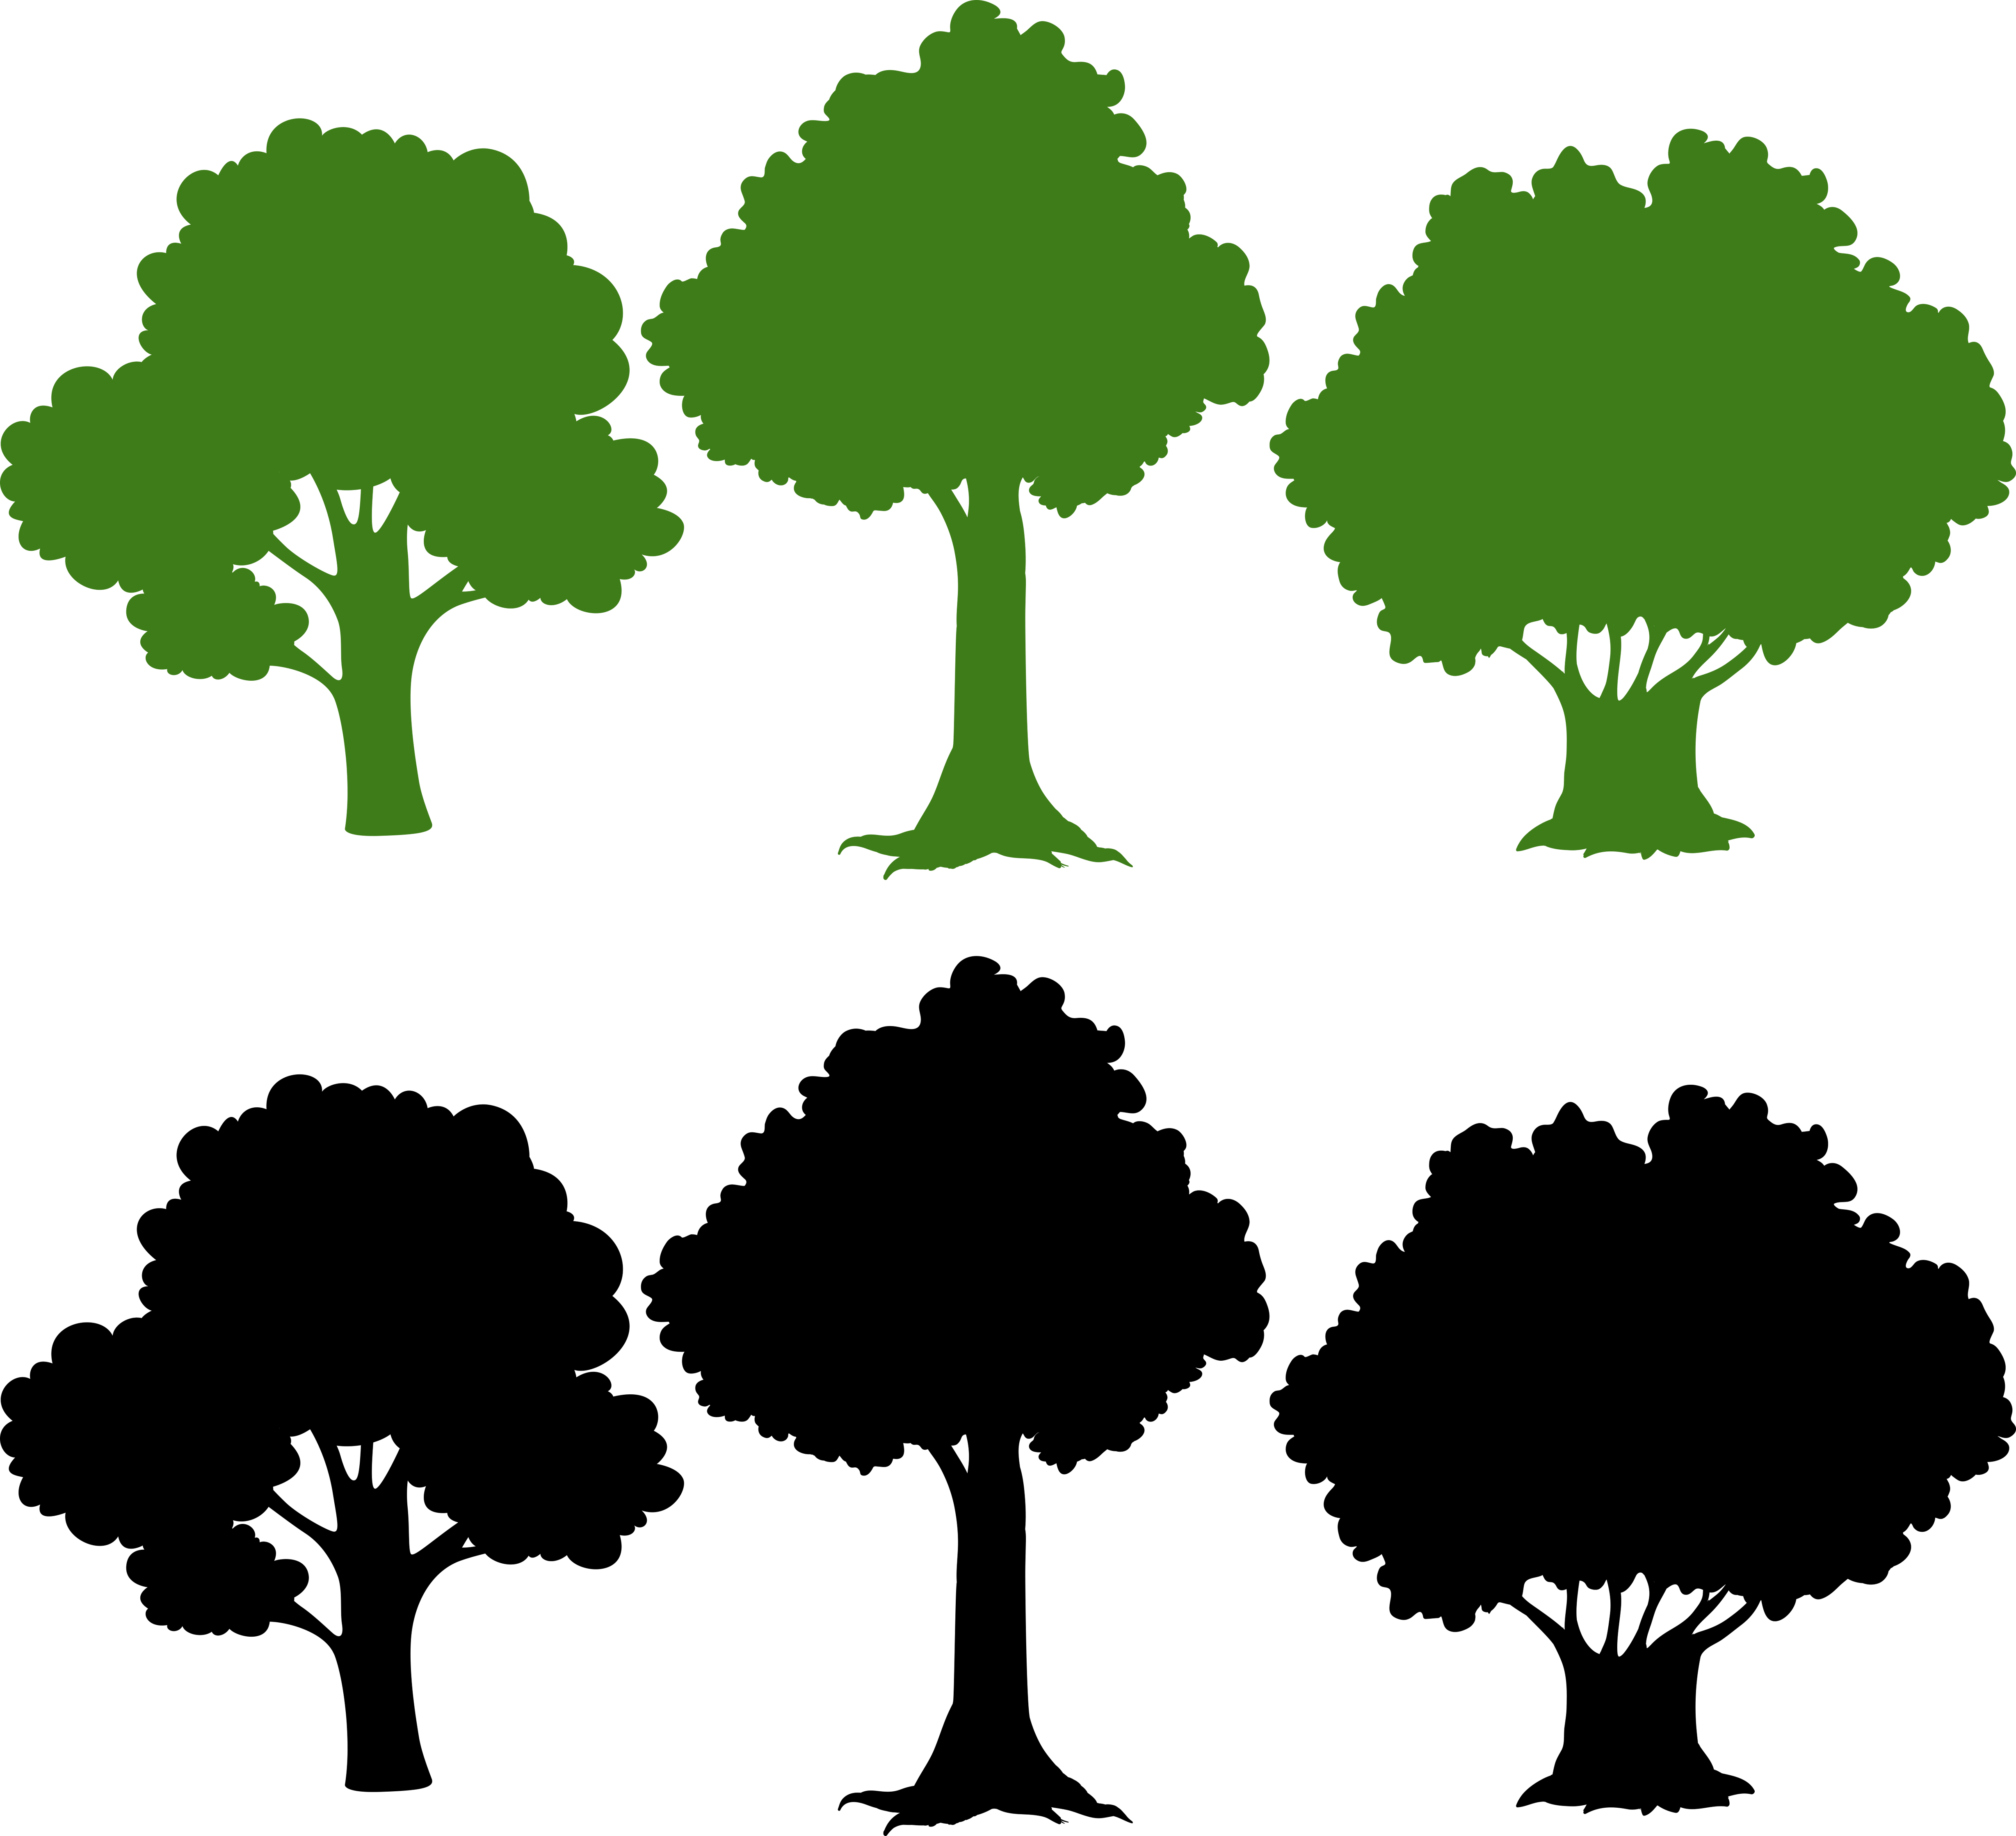 Download Set of silhouette tree 444252 - Download Free Vectors, Clipart Graphics & Vector Art